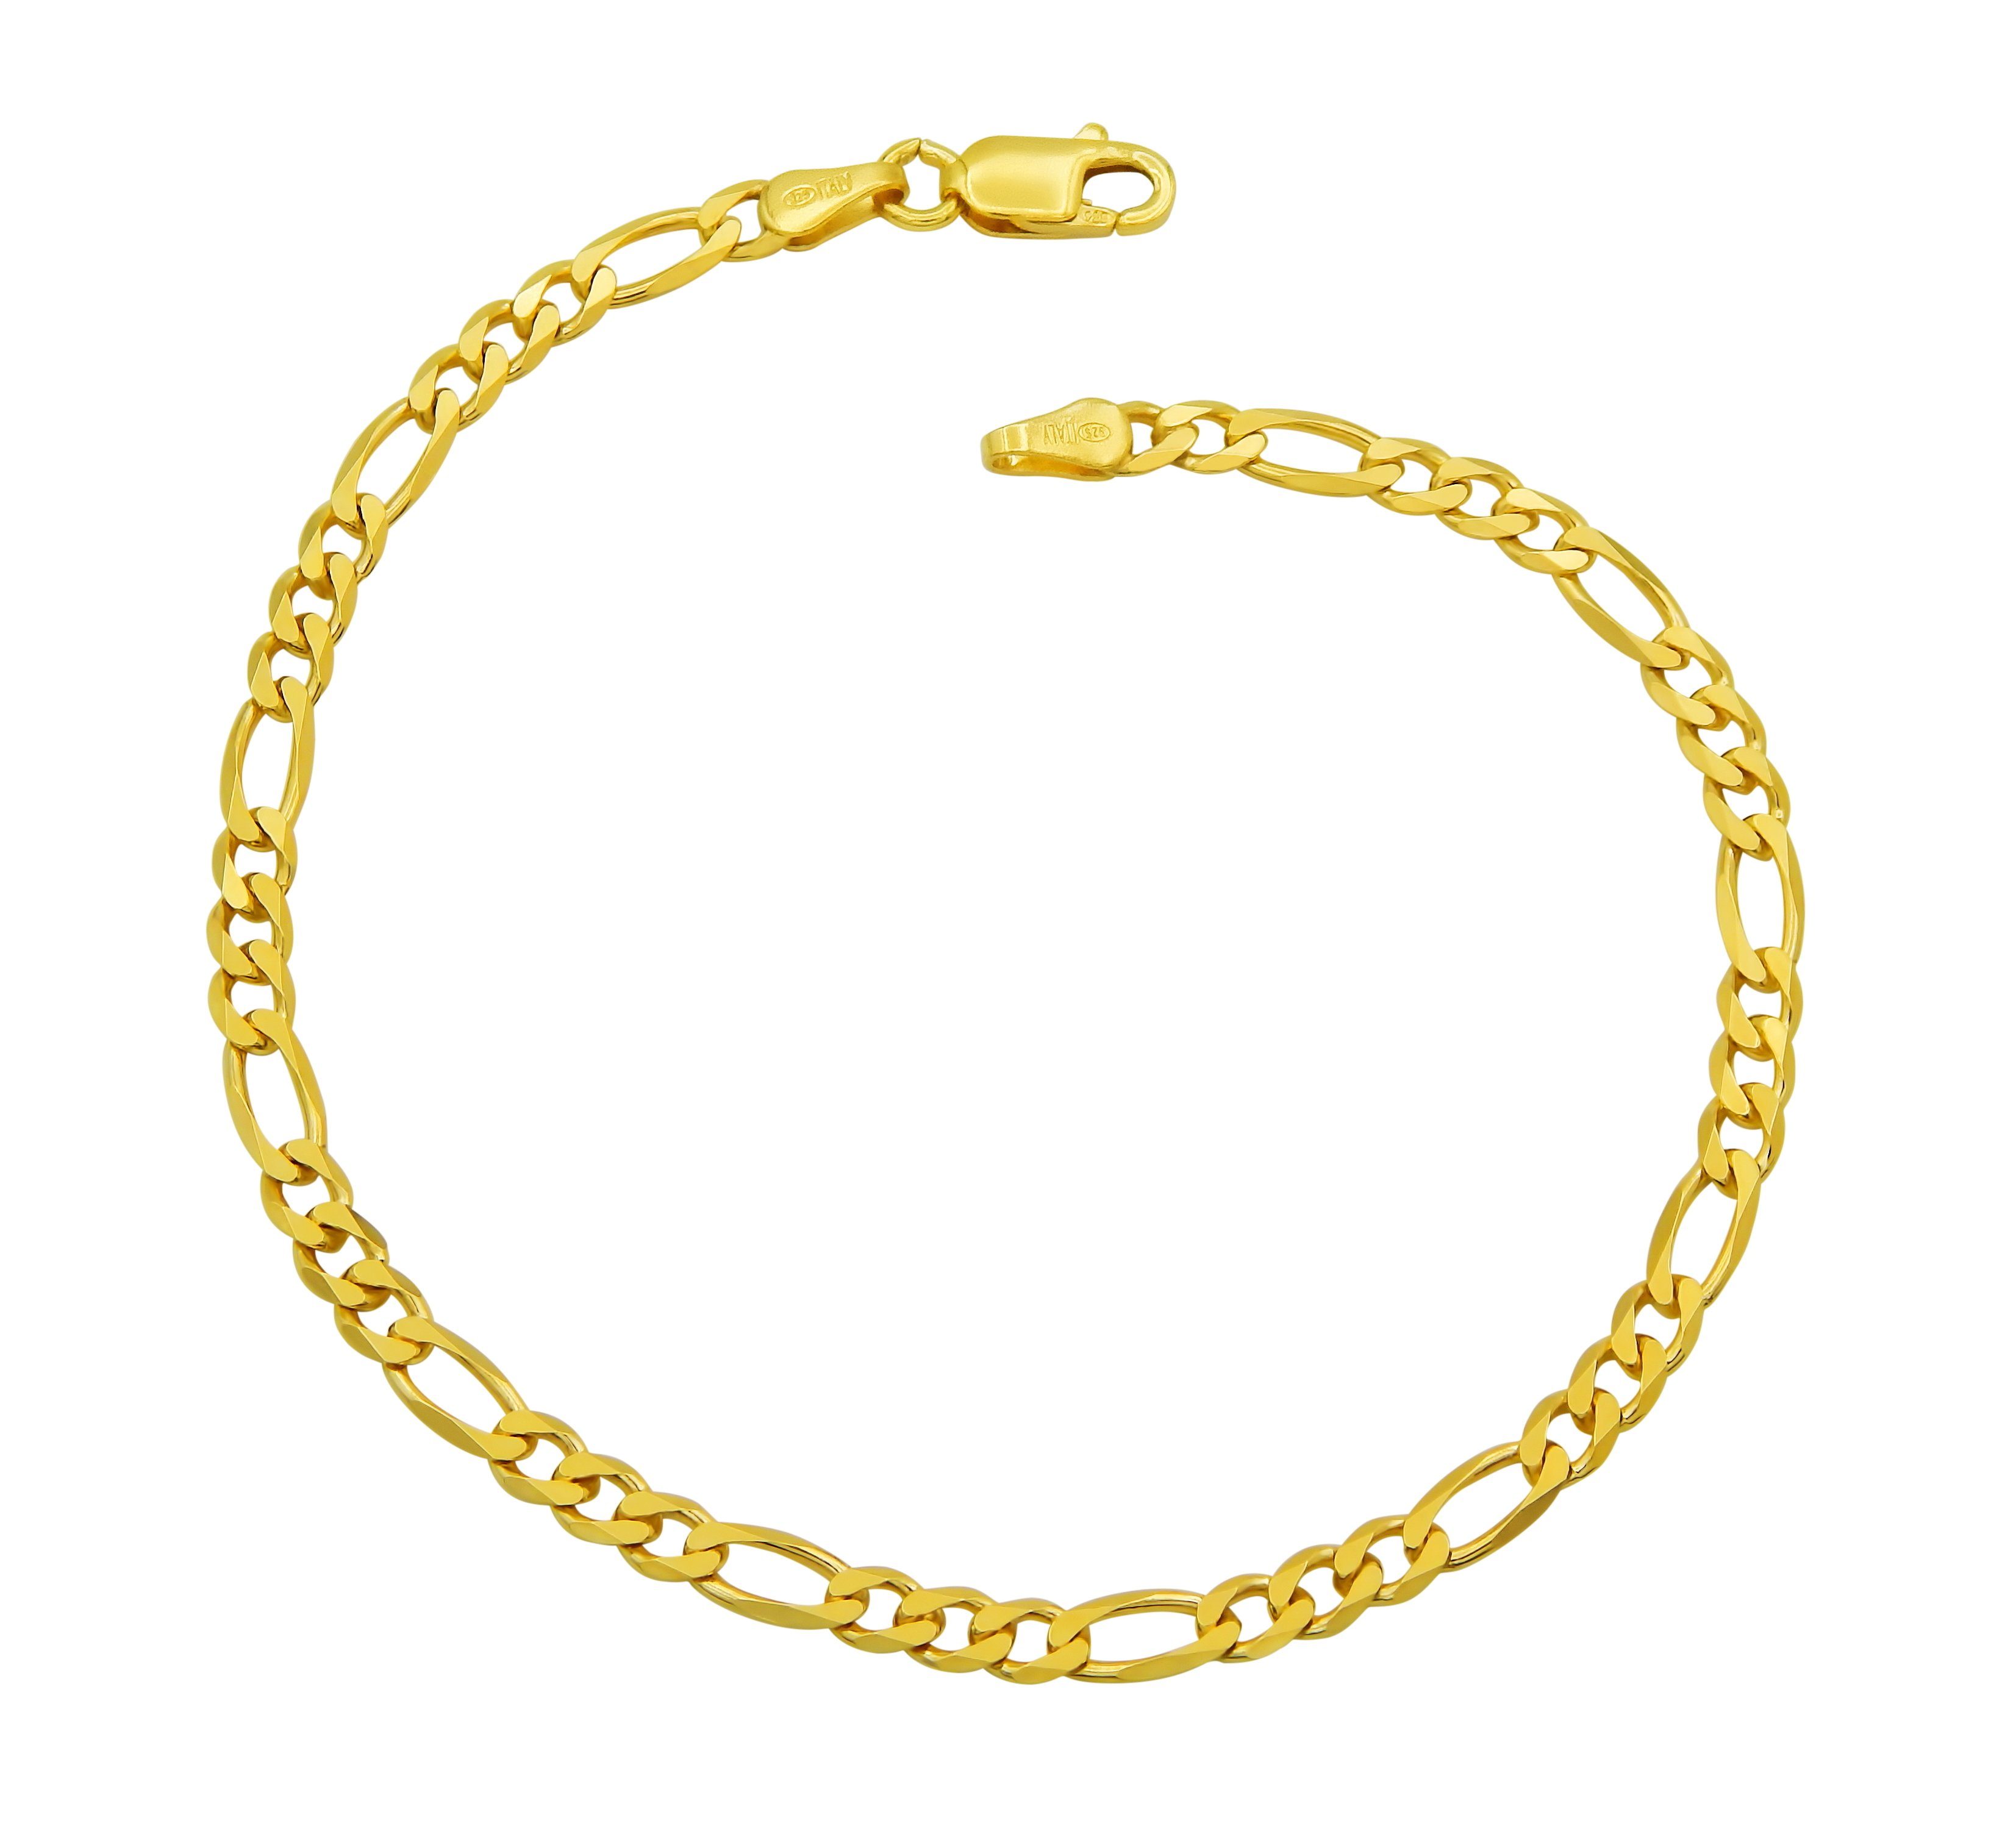 Kauf-mich-weg by Bella Länge Silberarmband Sterling vergoldet T - breit, 3,5mm 21cm wählbar Silber Armband 17 925 Figaro